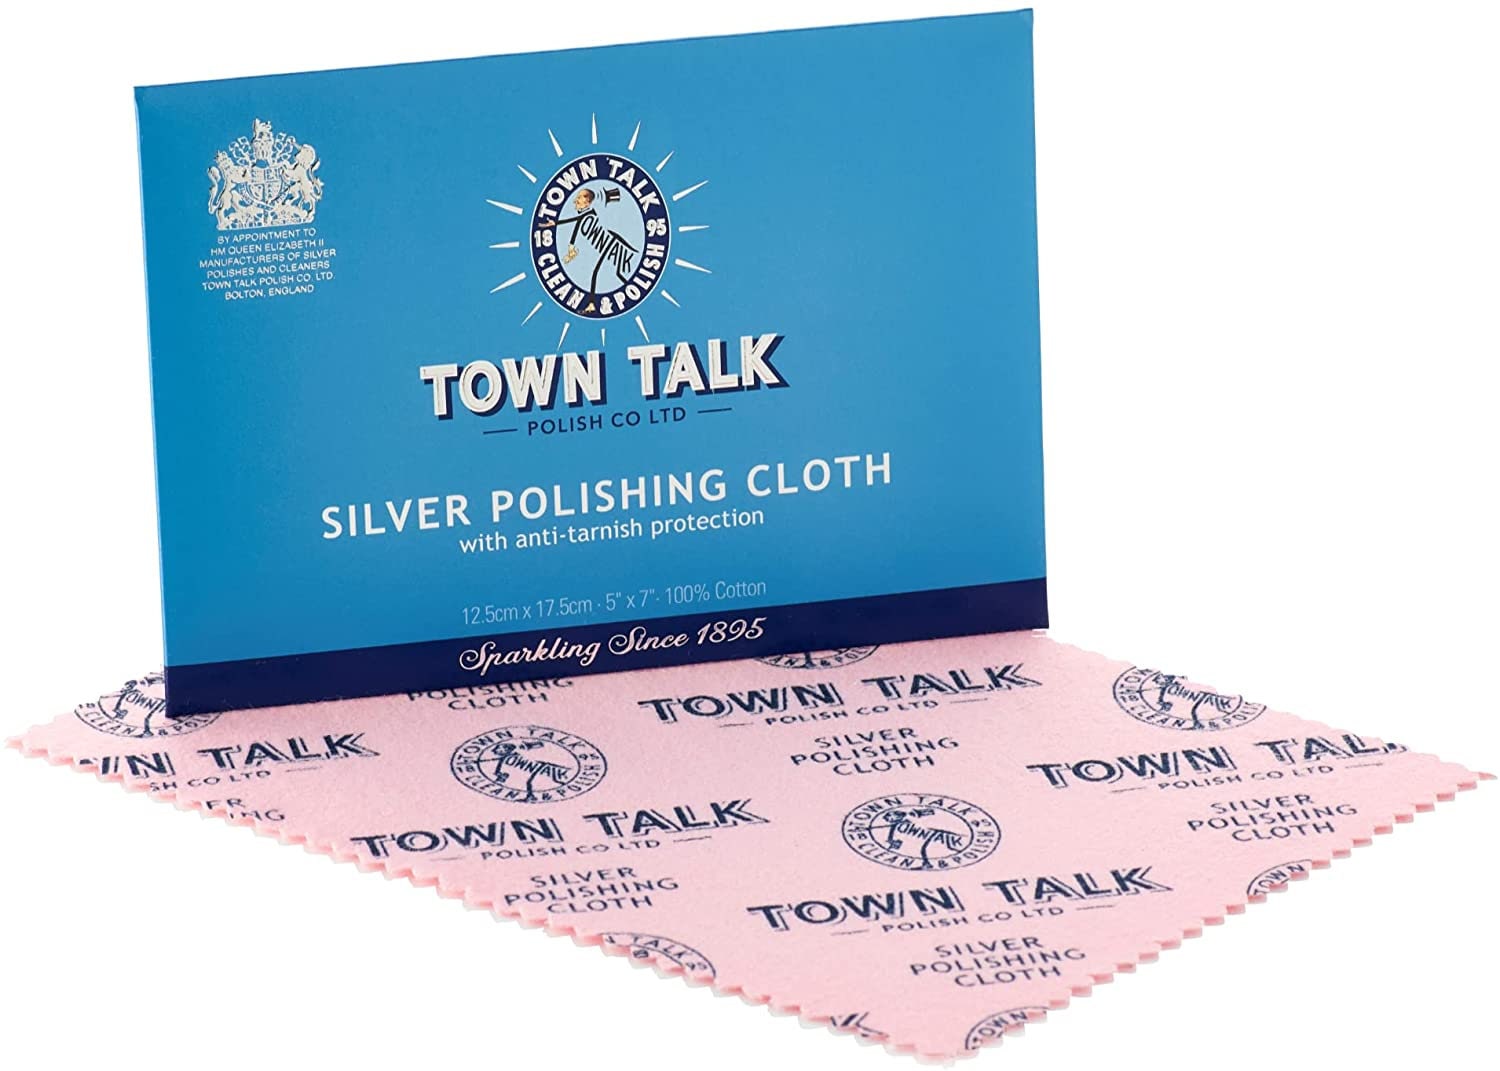 Town Talk Silver Polishing Cloth, Standard 12.5cm X 17.5cm Silver